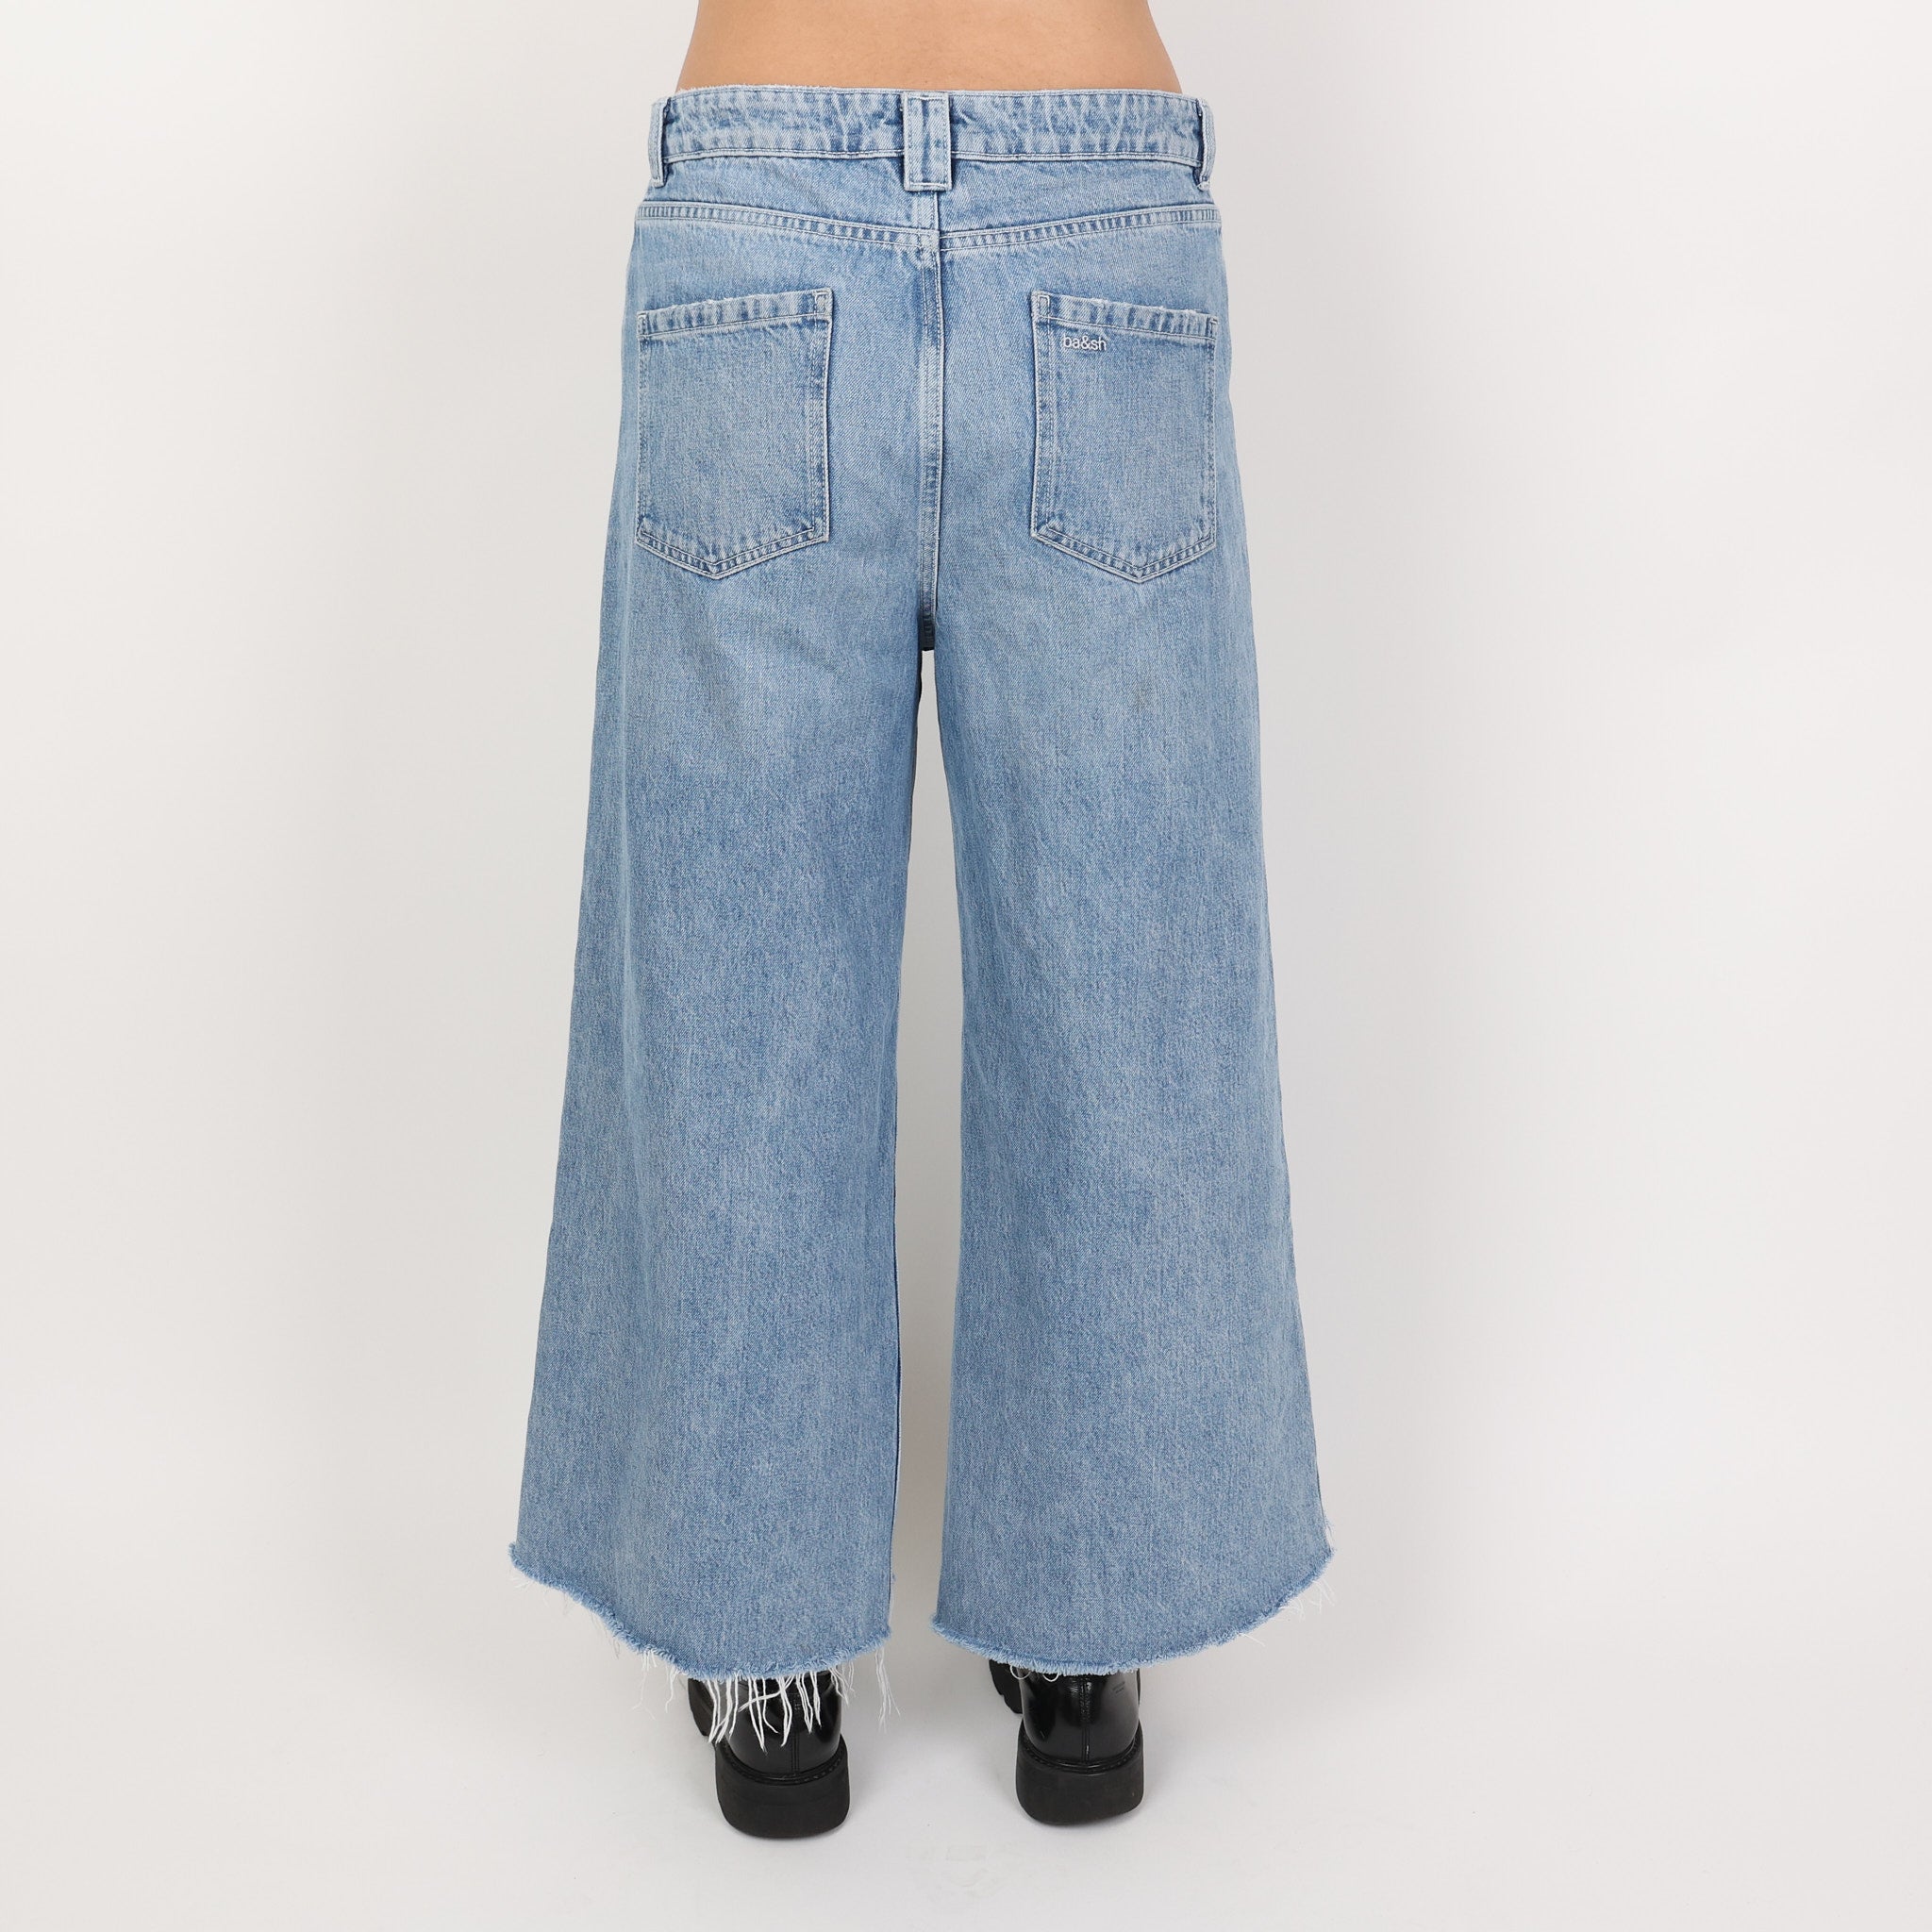 Jeans, UK Size 12